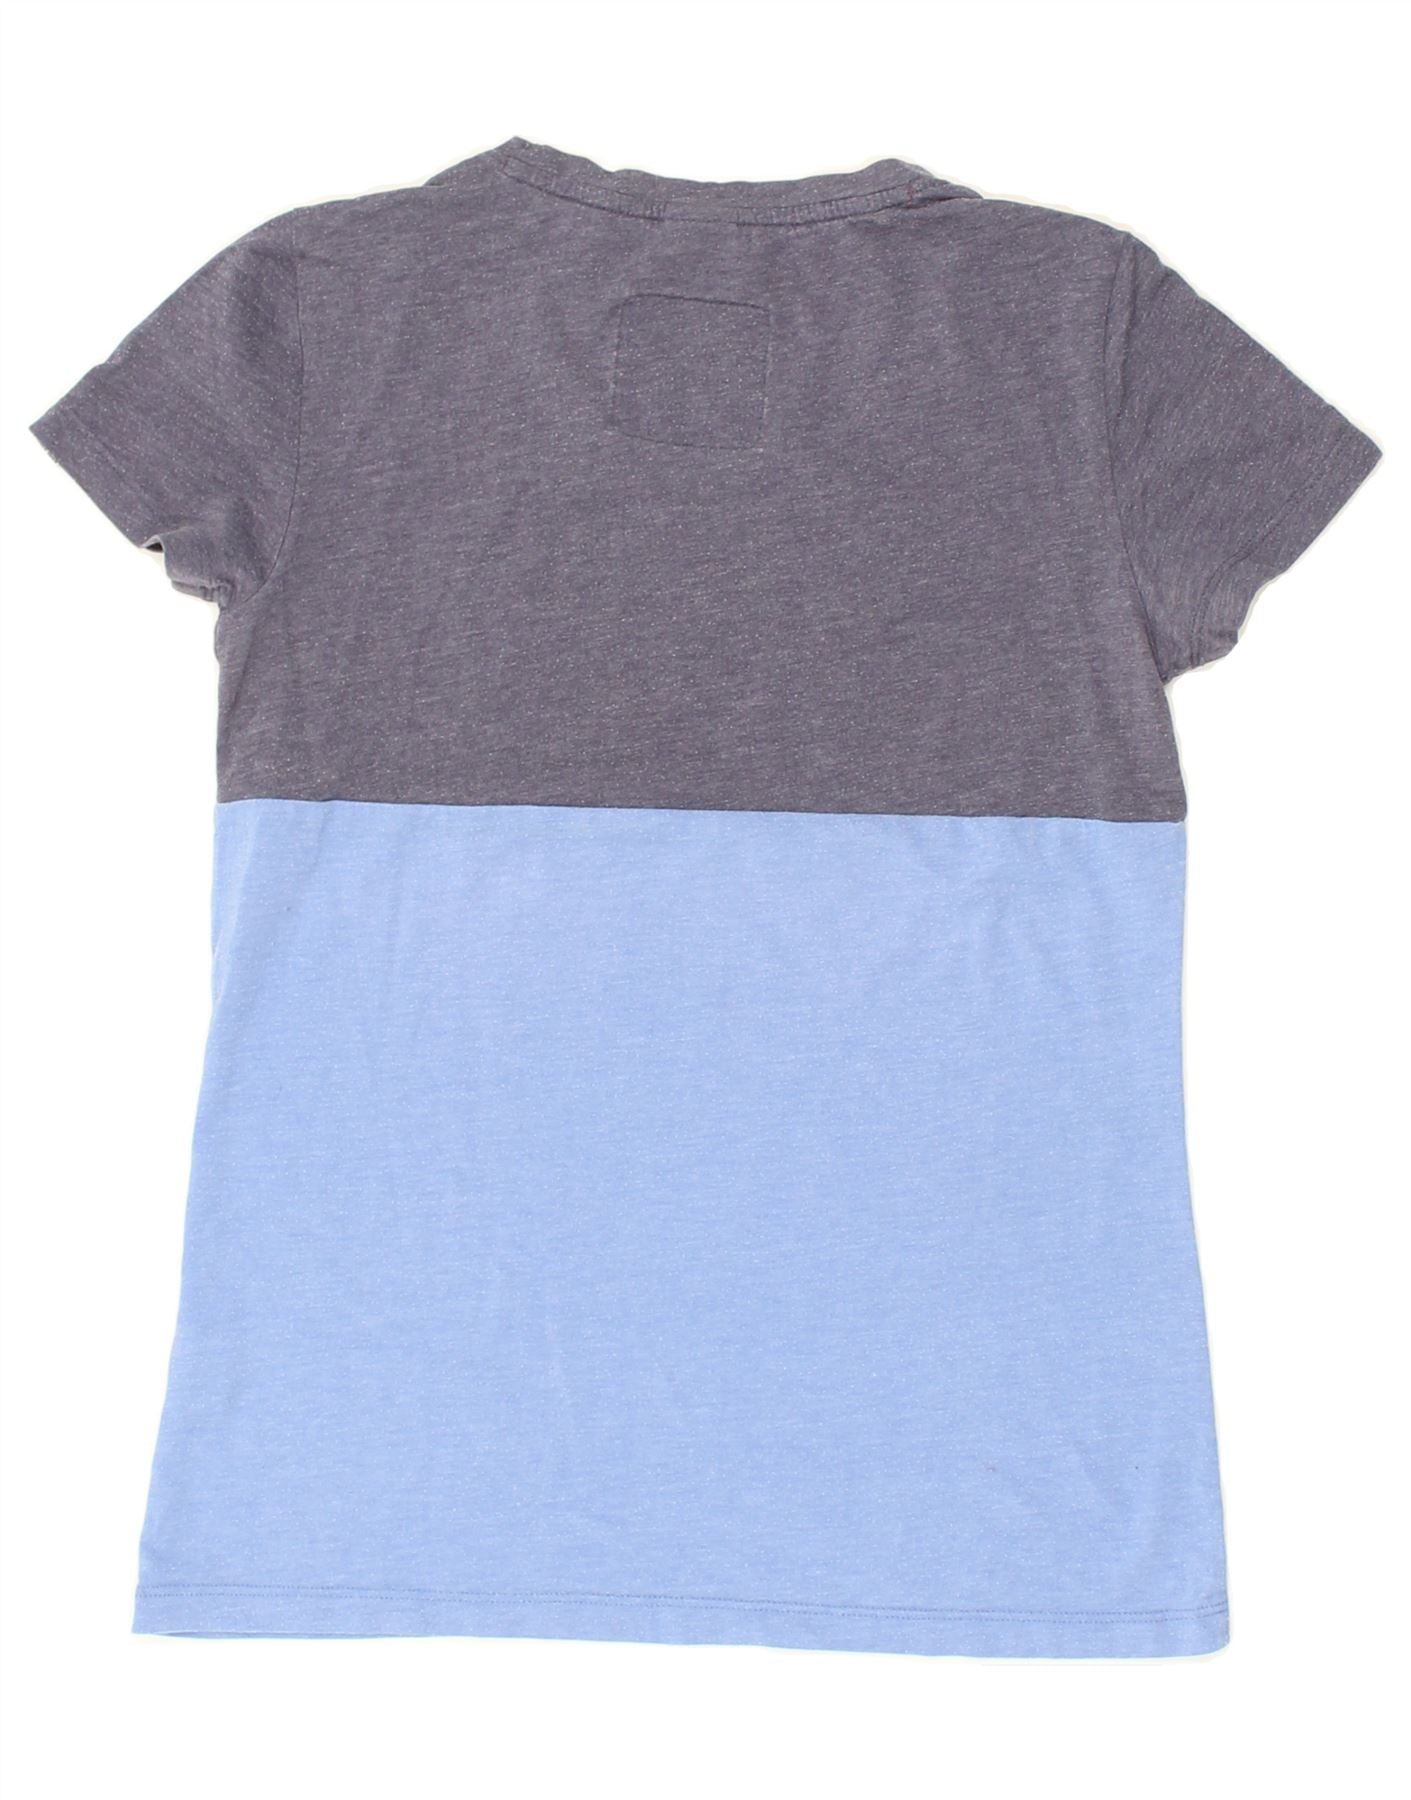 DISNEY Womens Graphic T-Shirt Top UK 16 Large/ UK 18 XL Grey